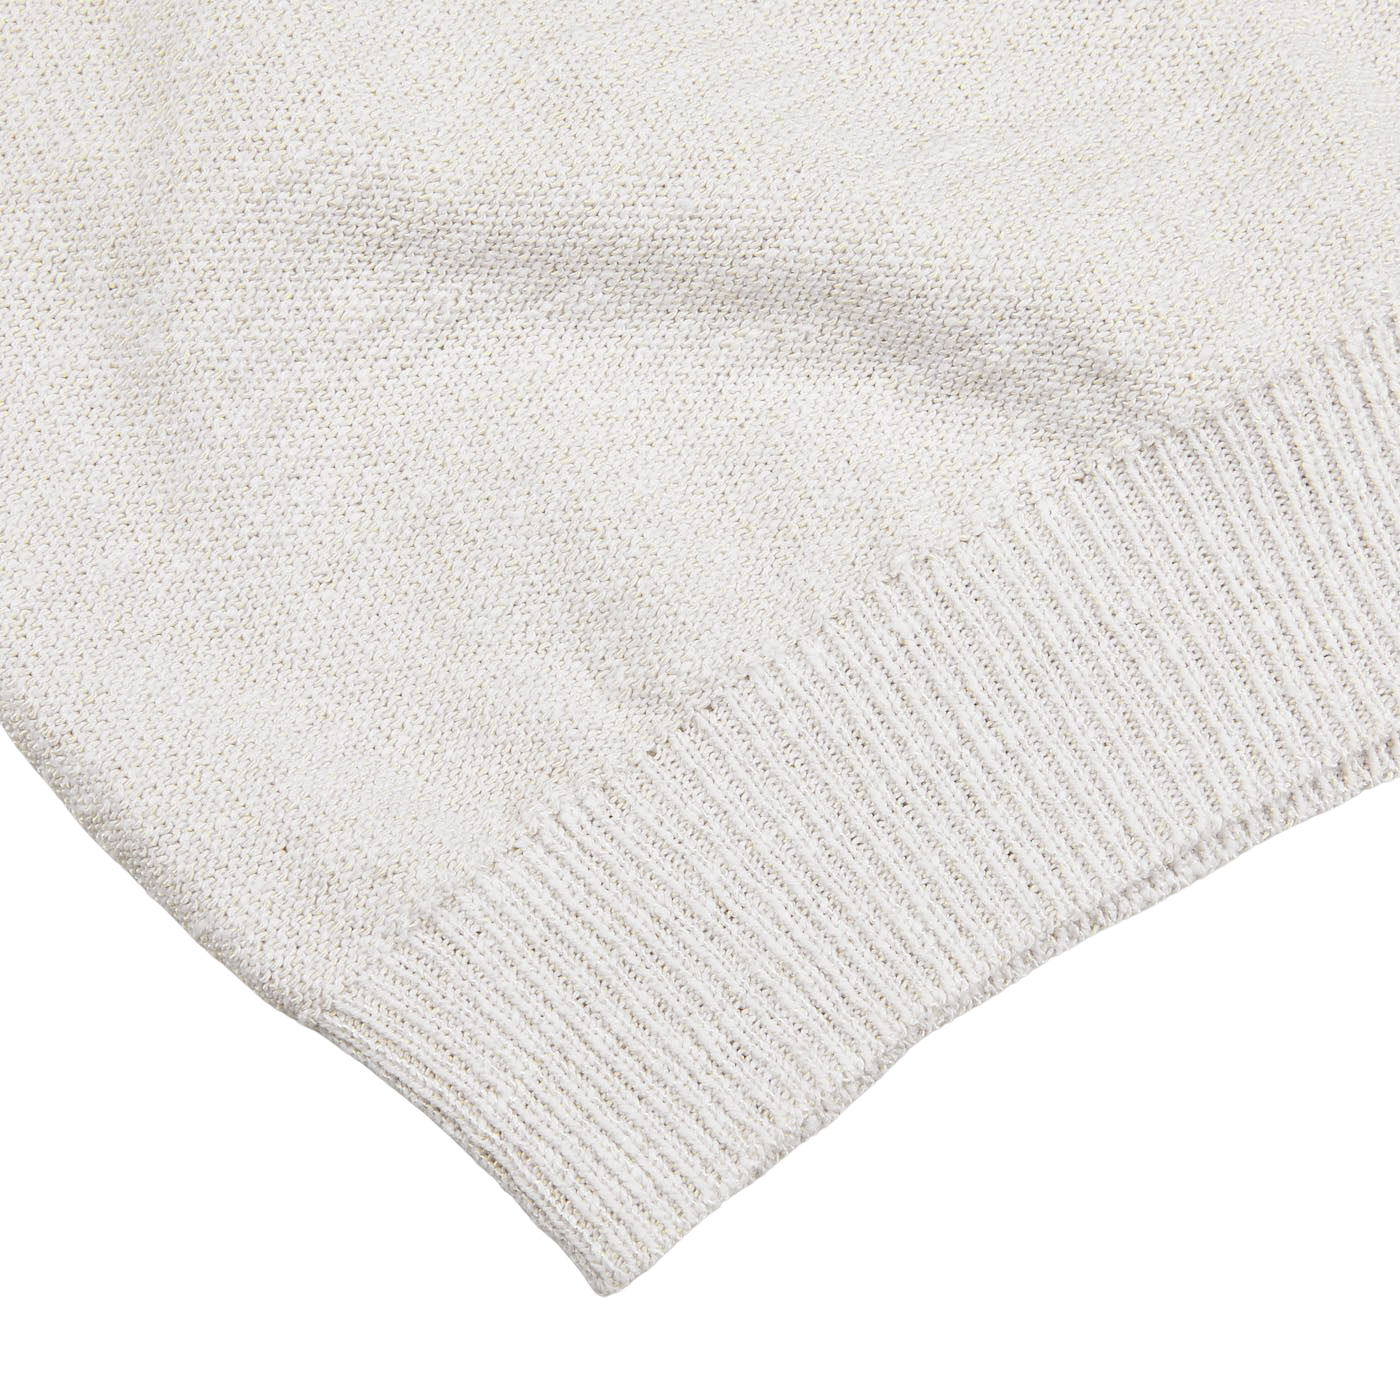 A close up of a Maurizio Baldassari Cream White Cotton Mouline 1/4 Zip Sweater on a white surface.